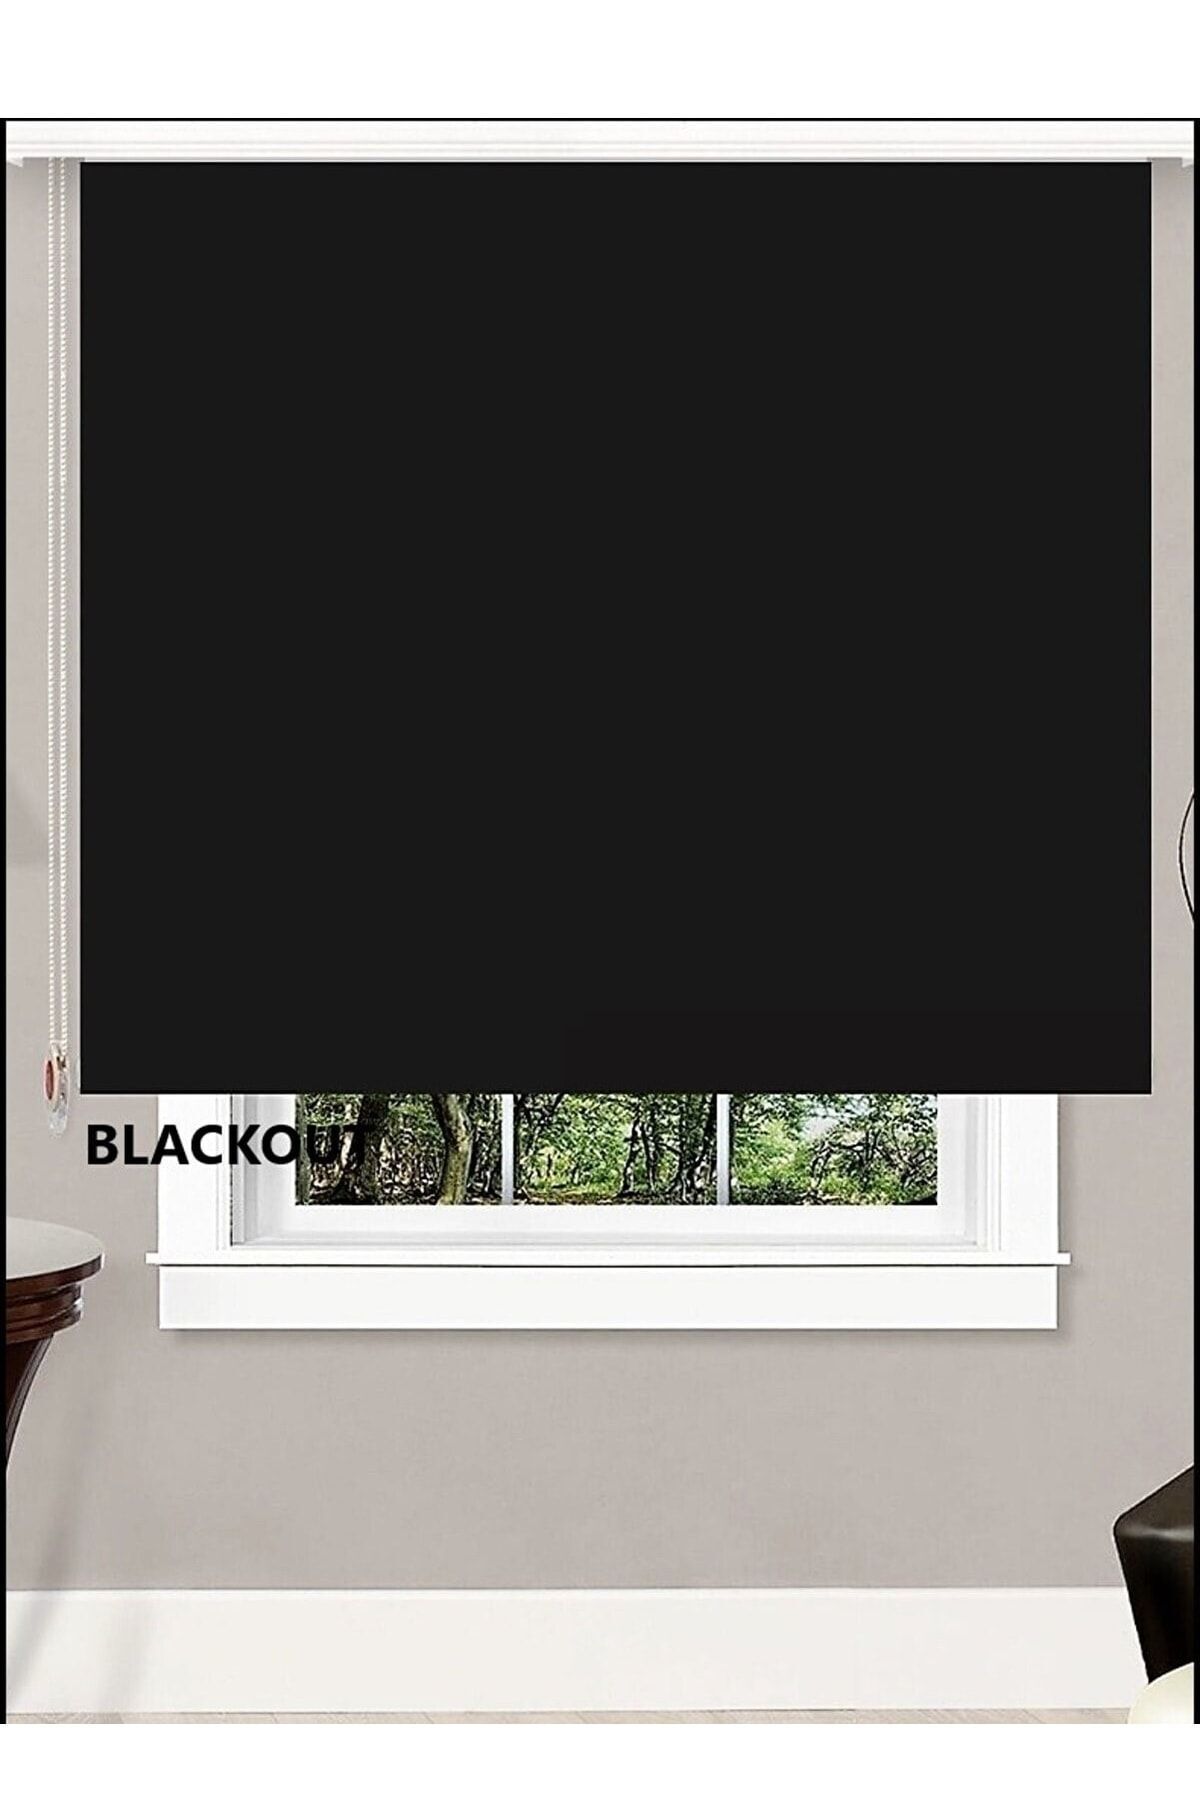 İREMKARAHOME Blackout Karartma Işık Geçirmeyen Stor Perde Siyah